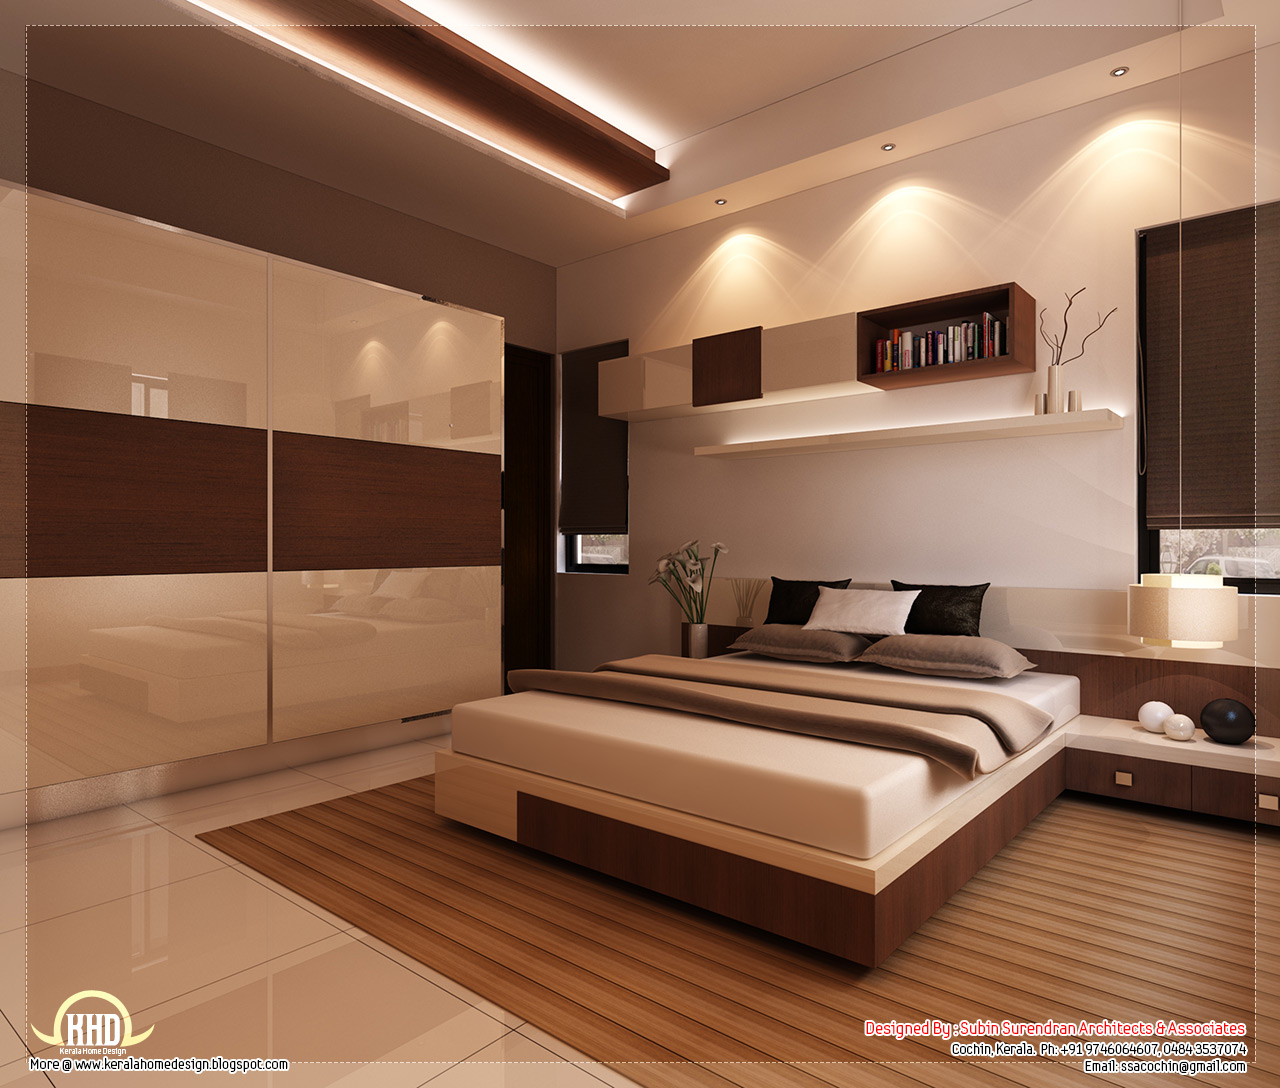 Beautiful home interior designs